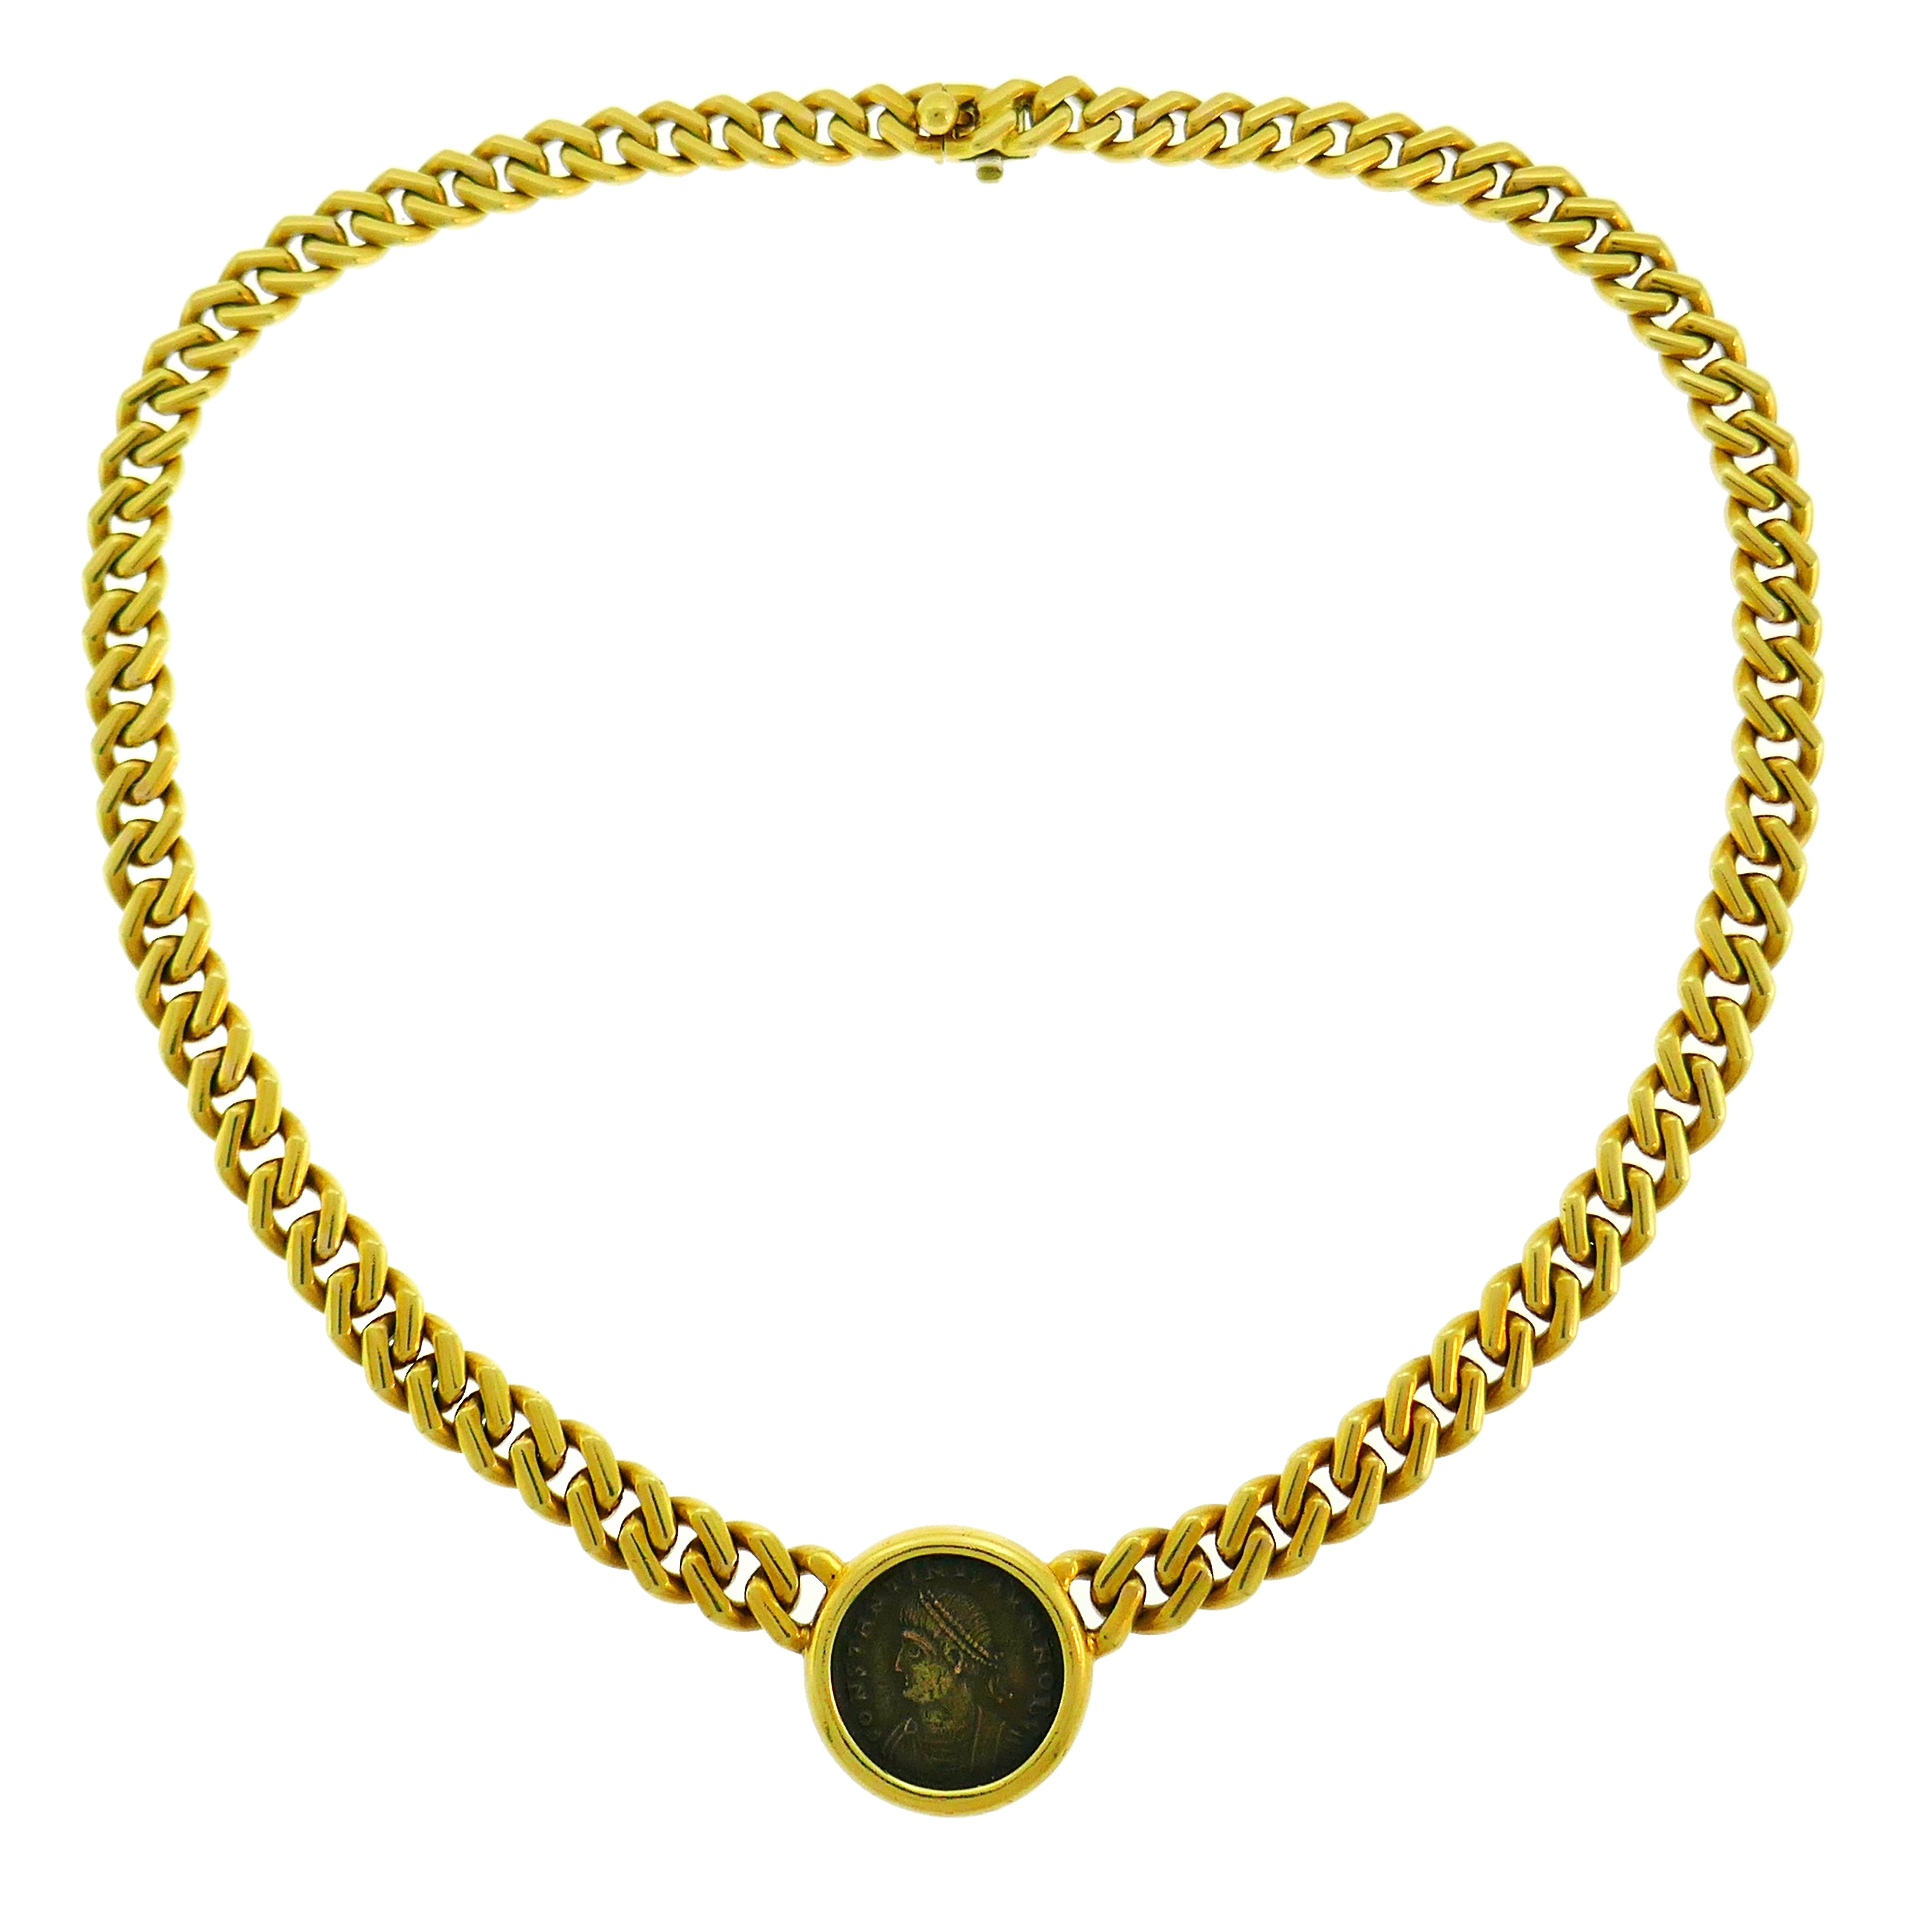 bvlgari necklace prices